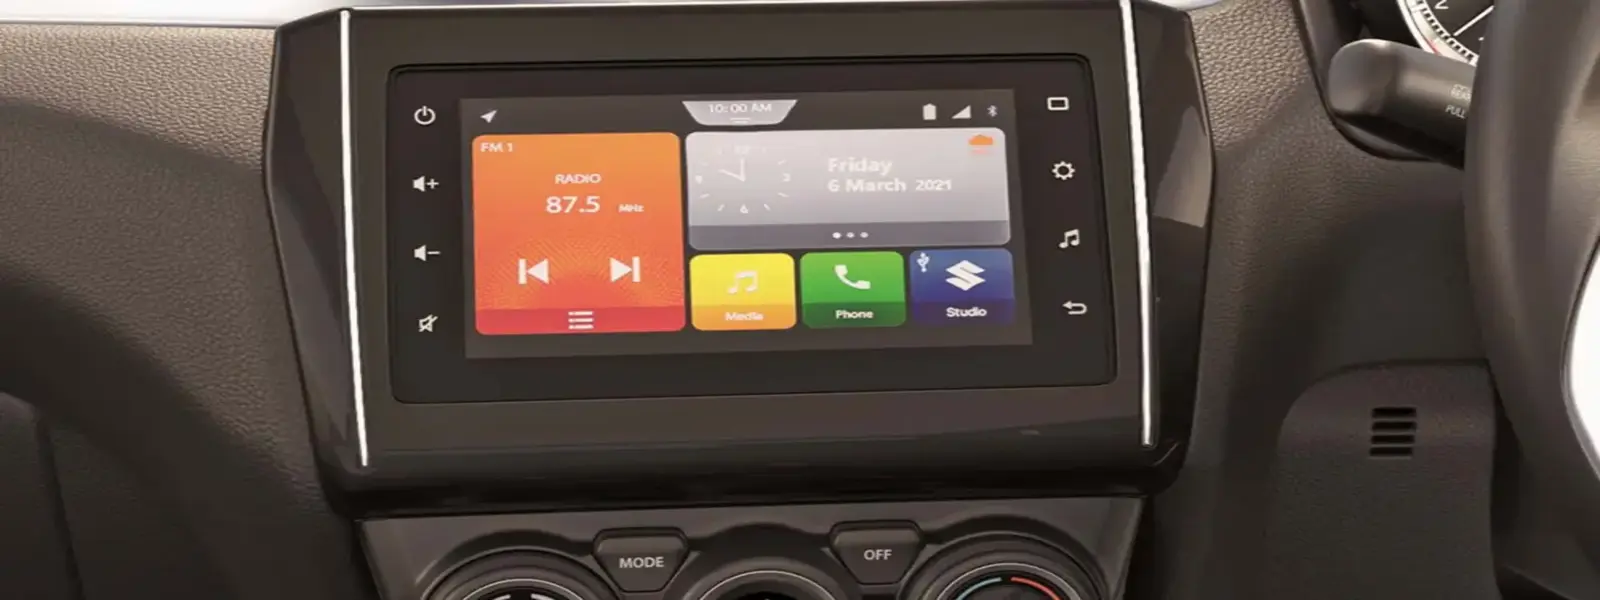 Swift- SmartPlay Infotainment System Pasco Automobiles Alipur, Gurgaon